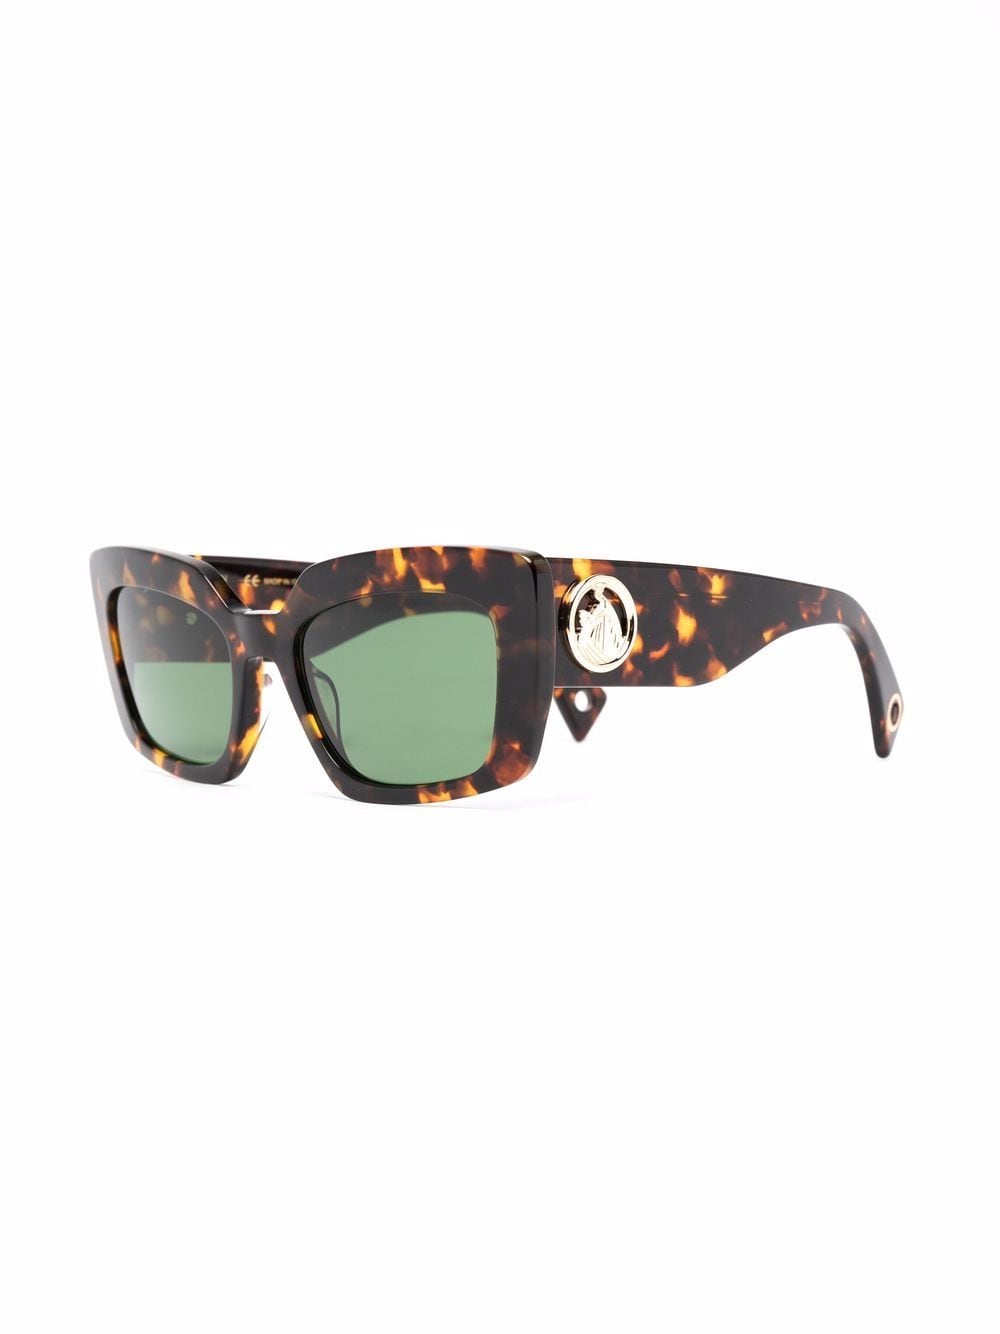 Image 2 of Lanvin green-tinted tortoiseshell-effect sunglasses